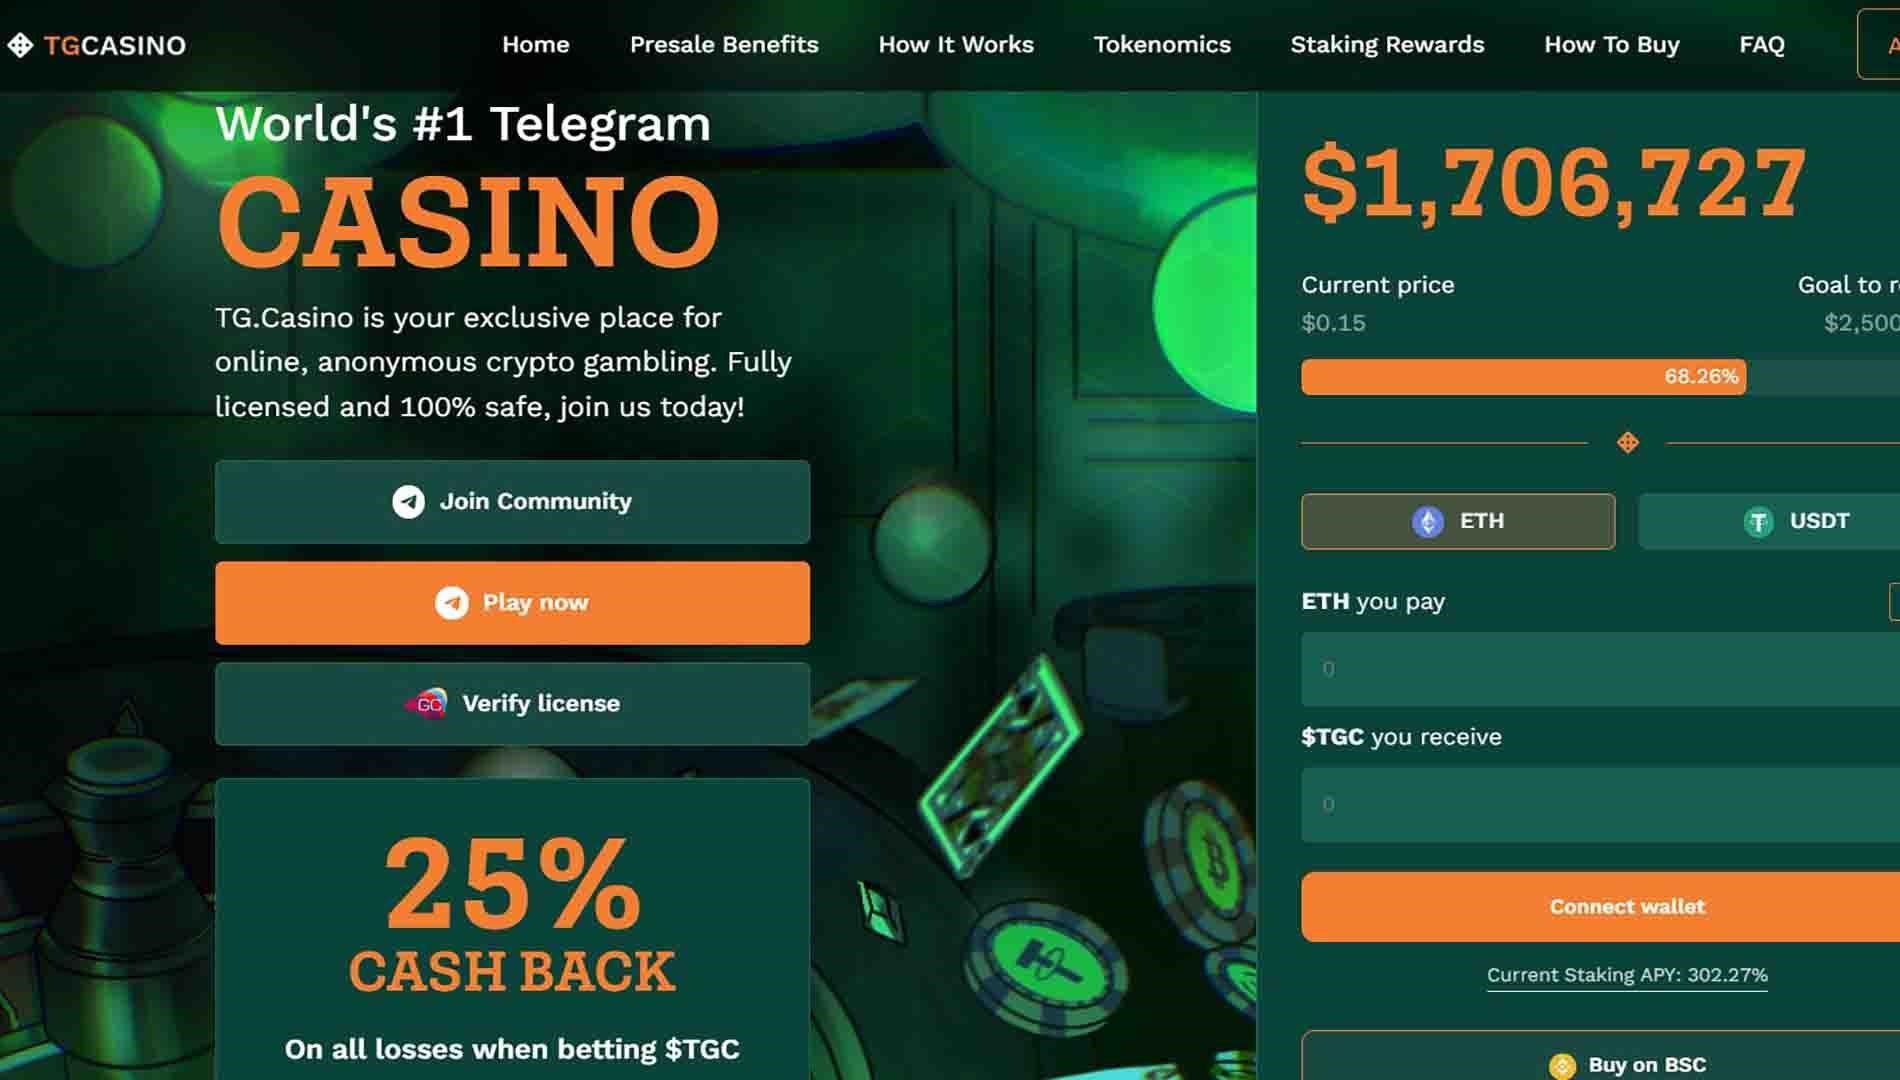 Image of TG casinos' hompage